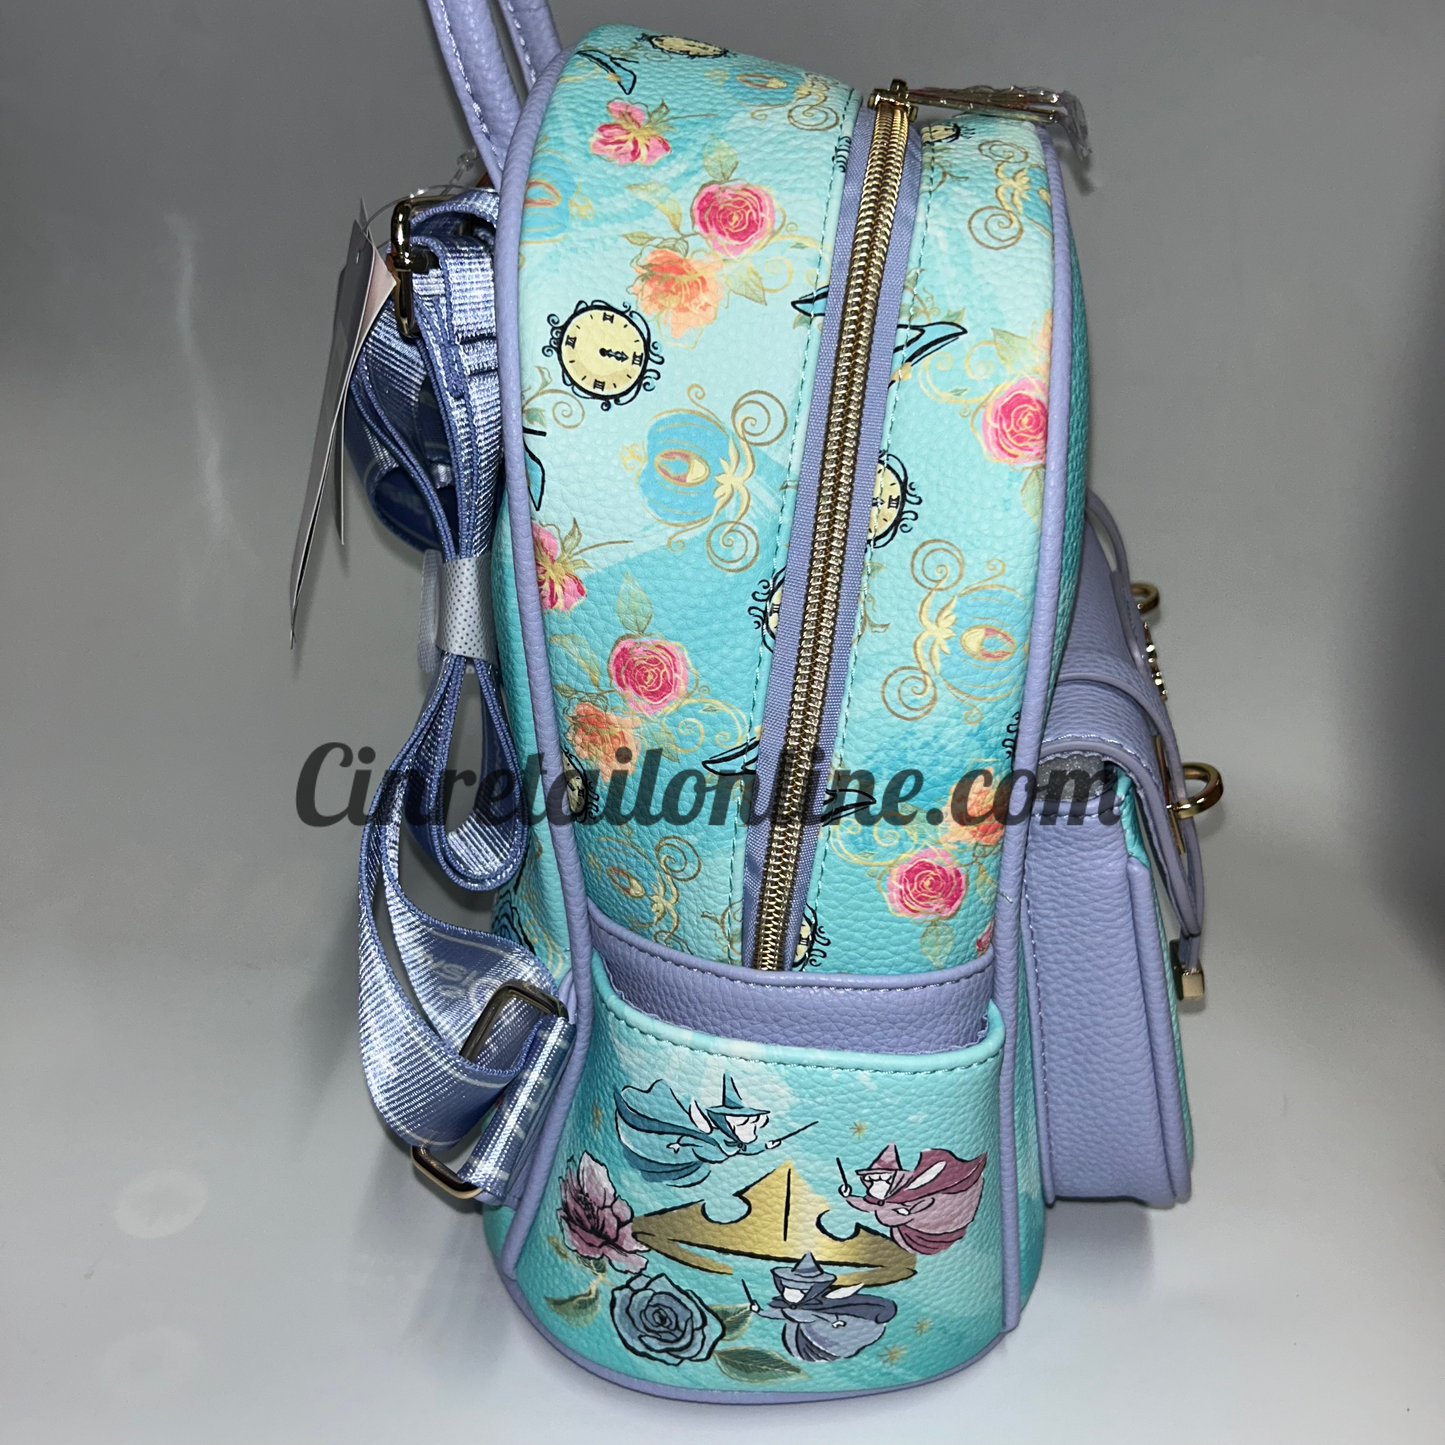 Cinderella Disney Backpack